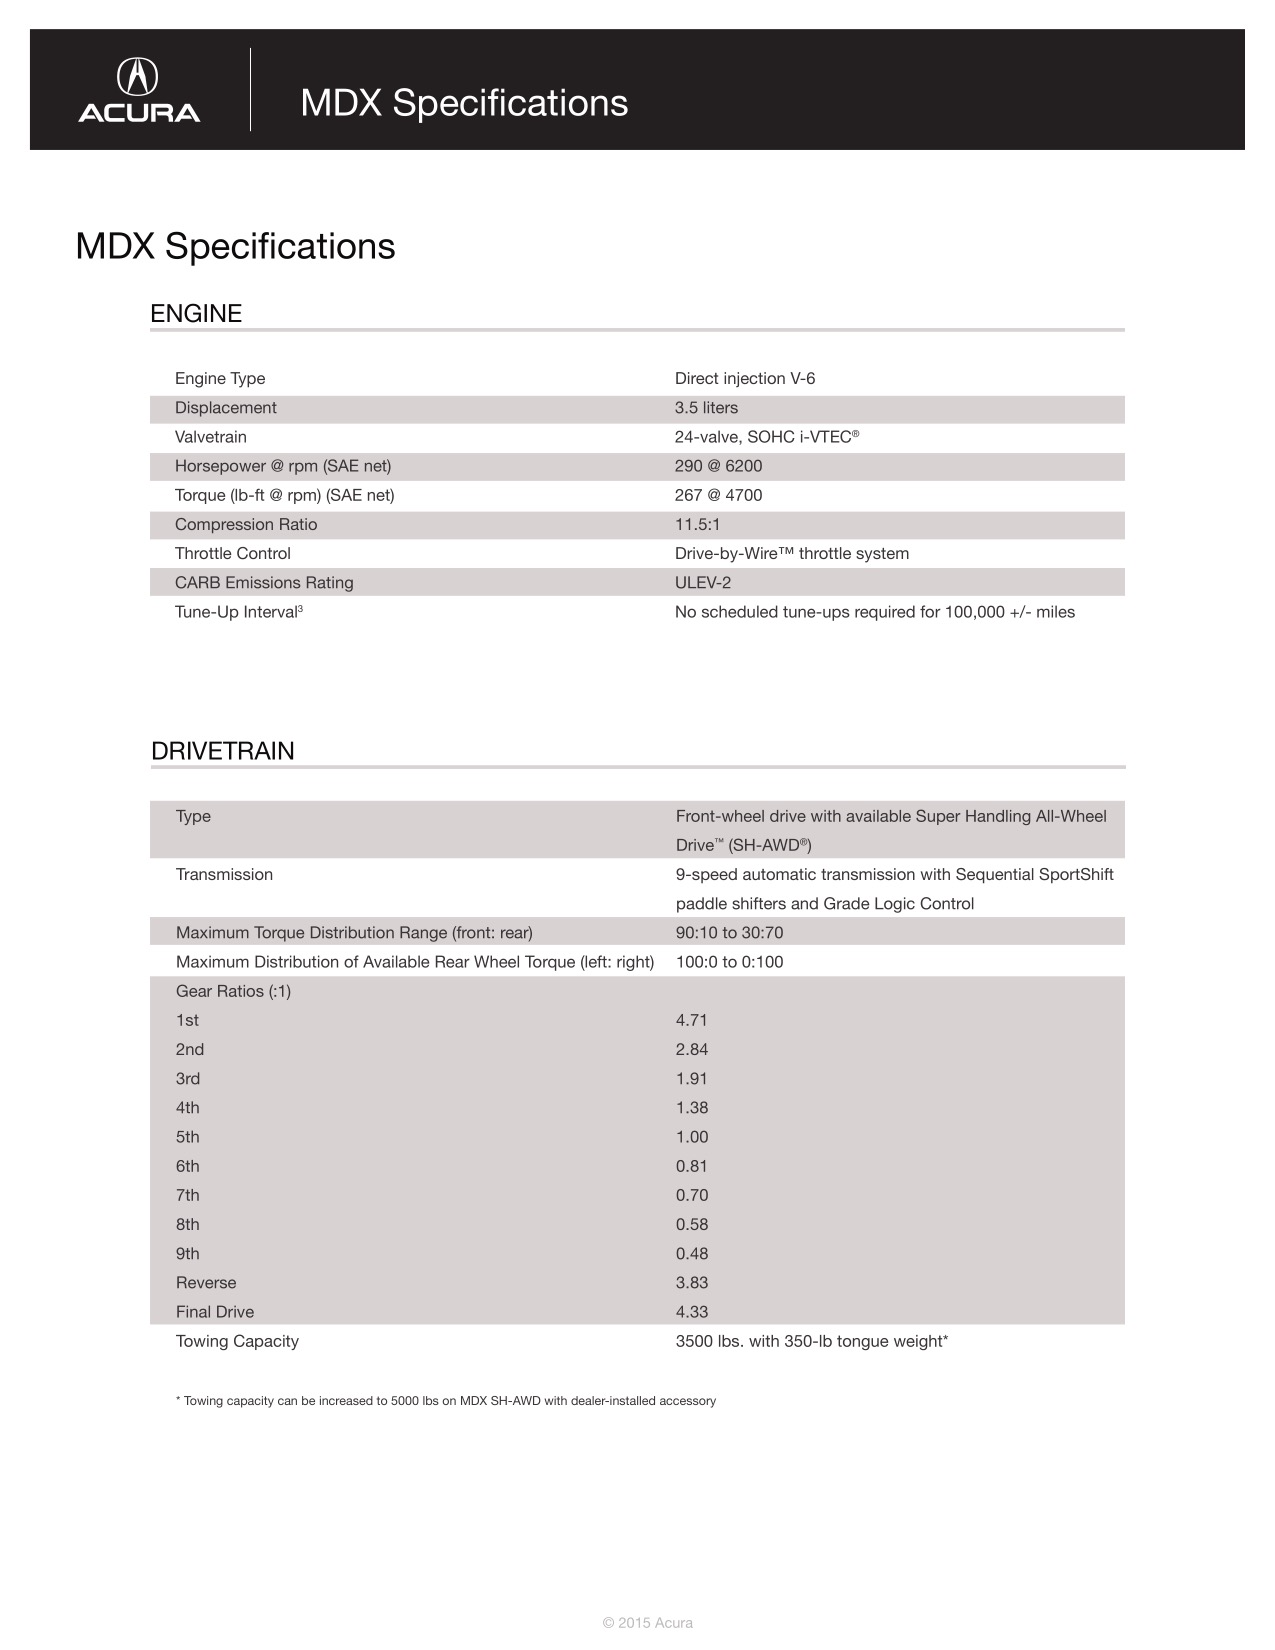 2016 Acura MDX Brochure Page 7